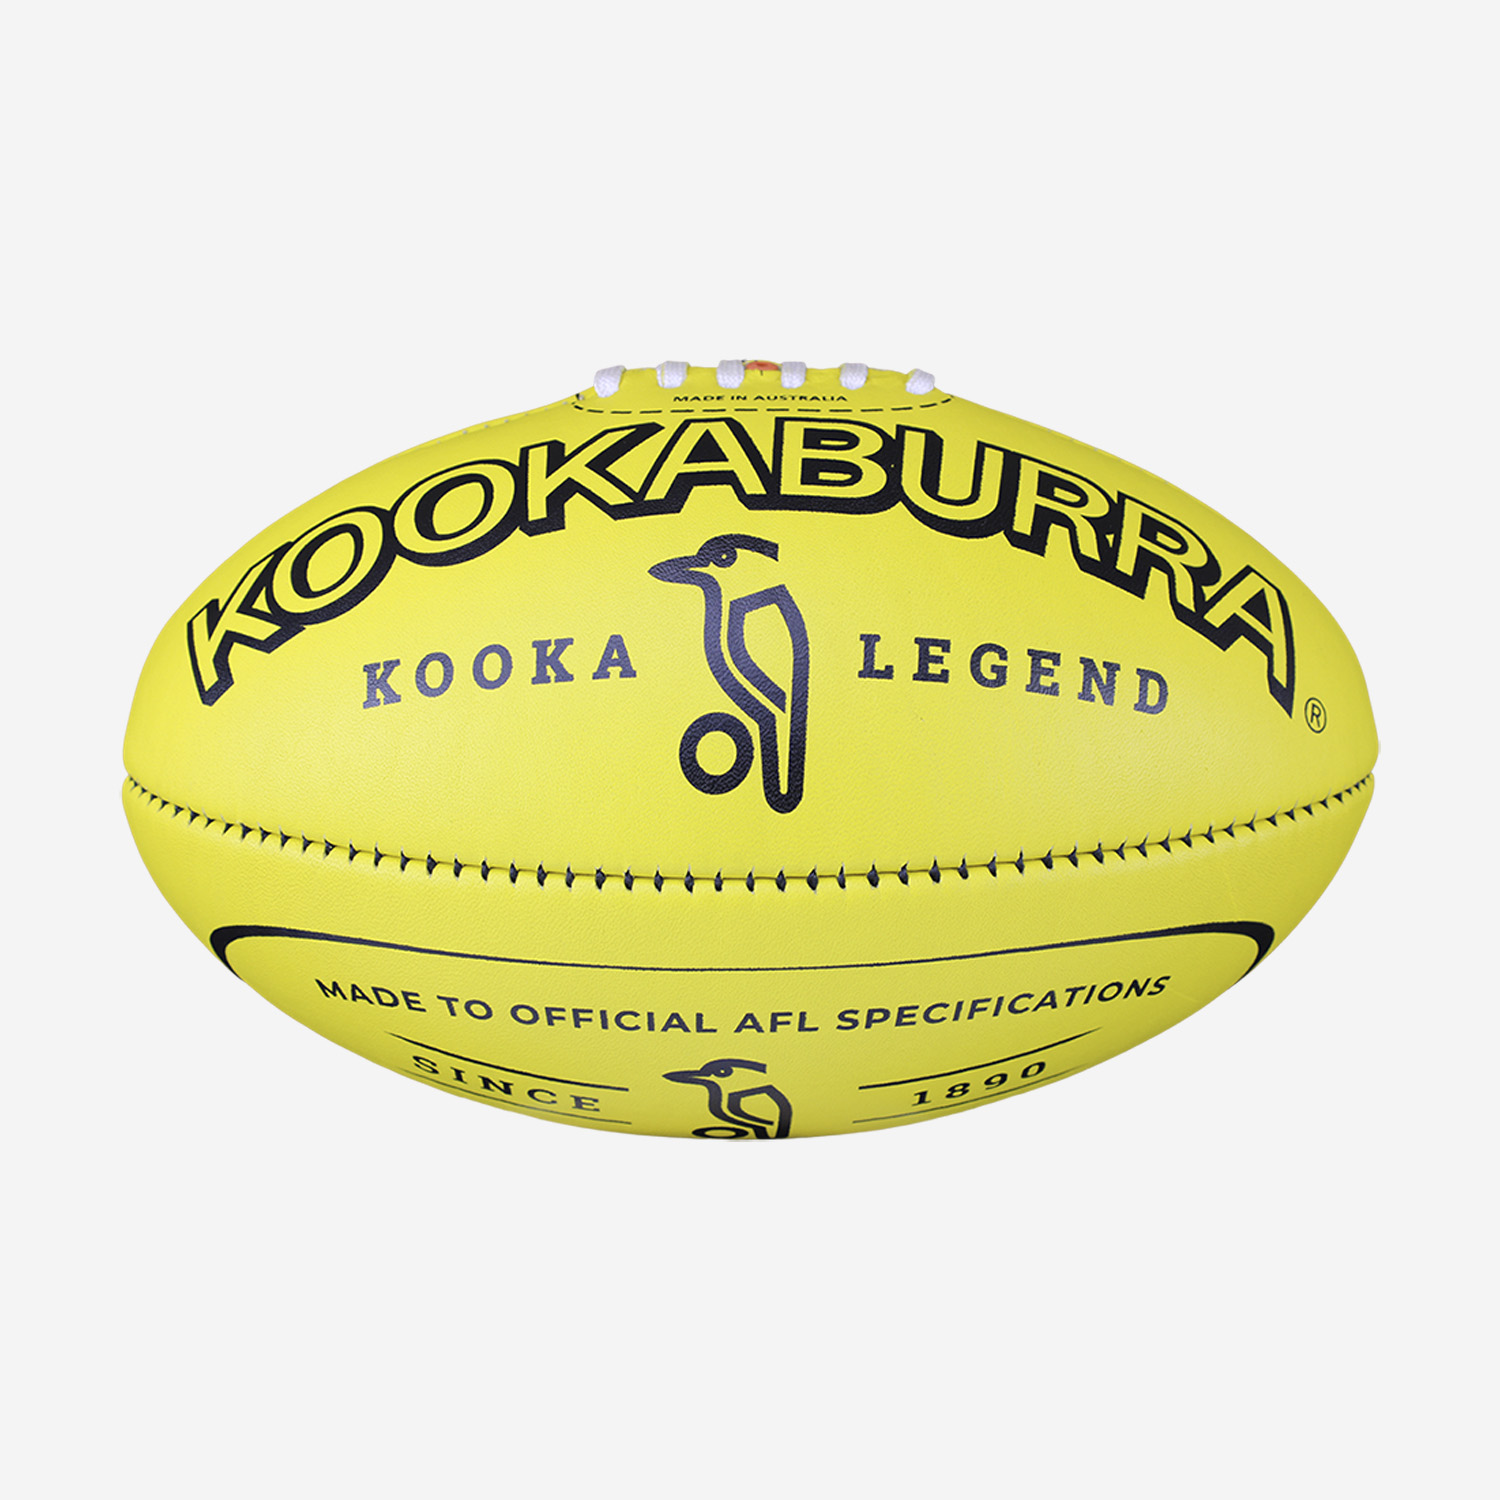 KOOKABURRA LEGEND FOOTBALLS